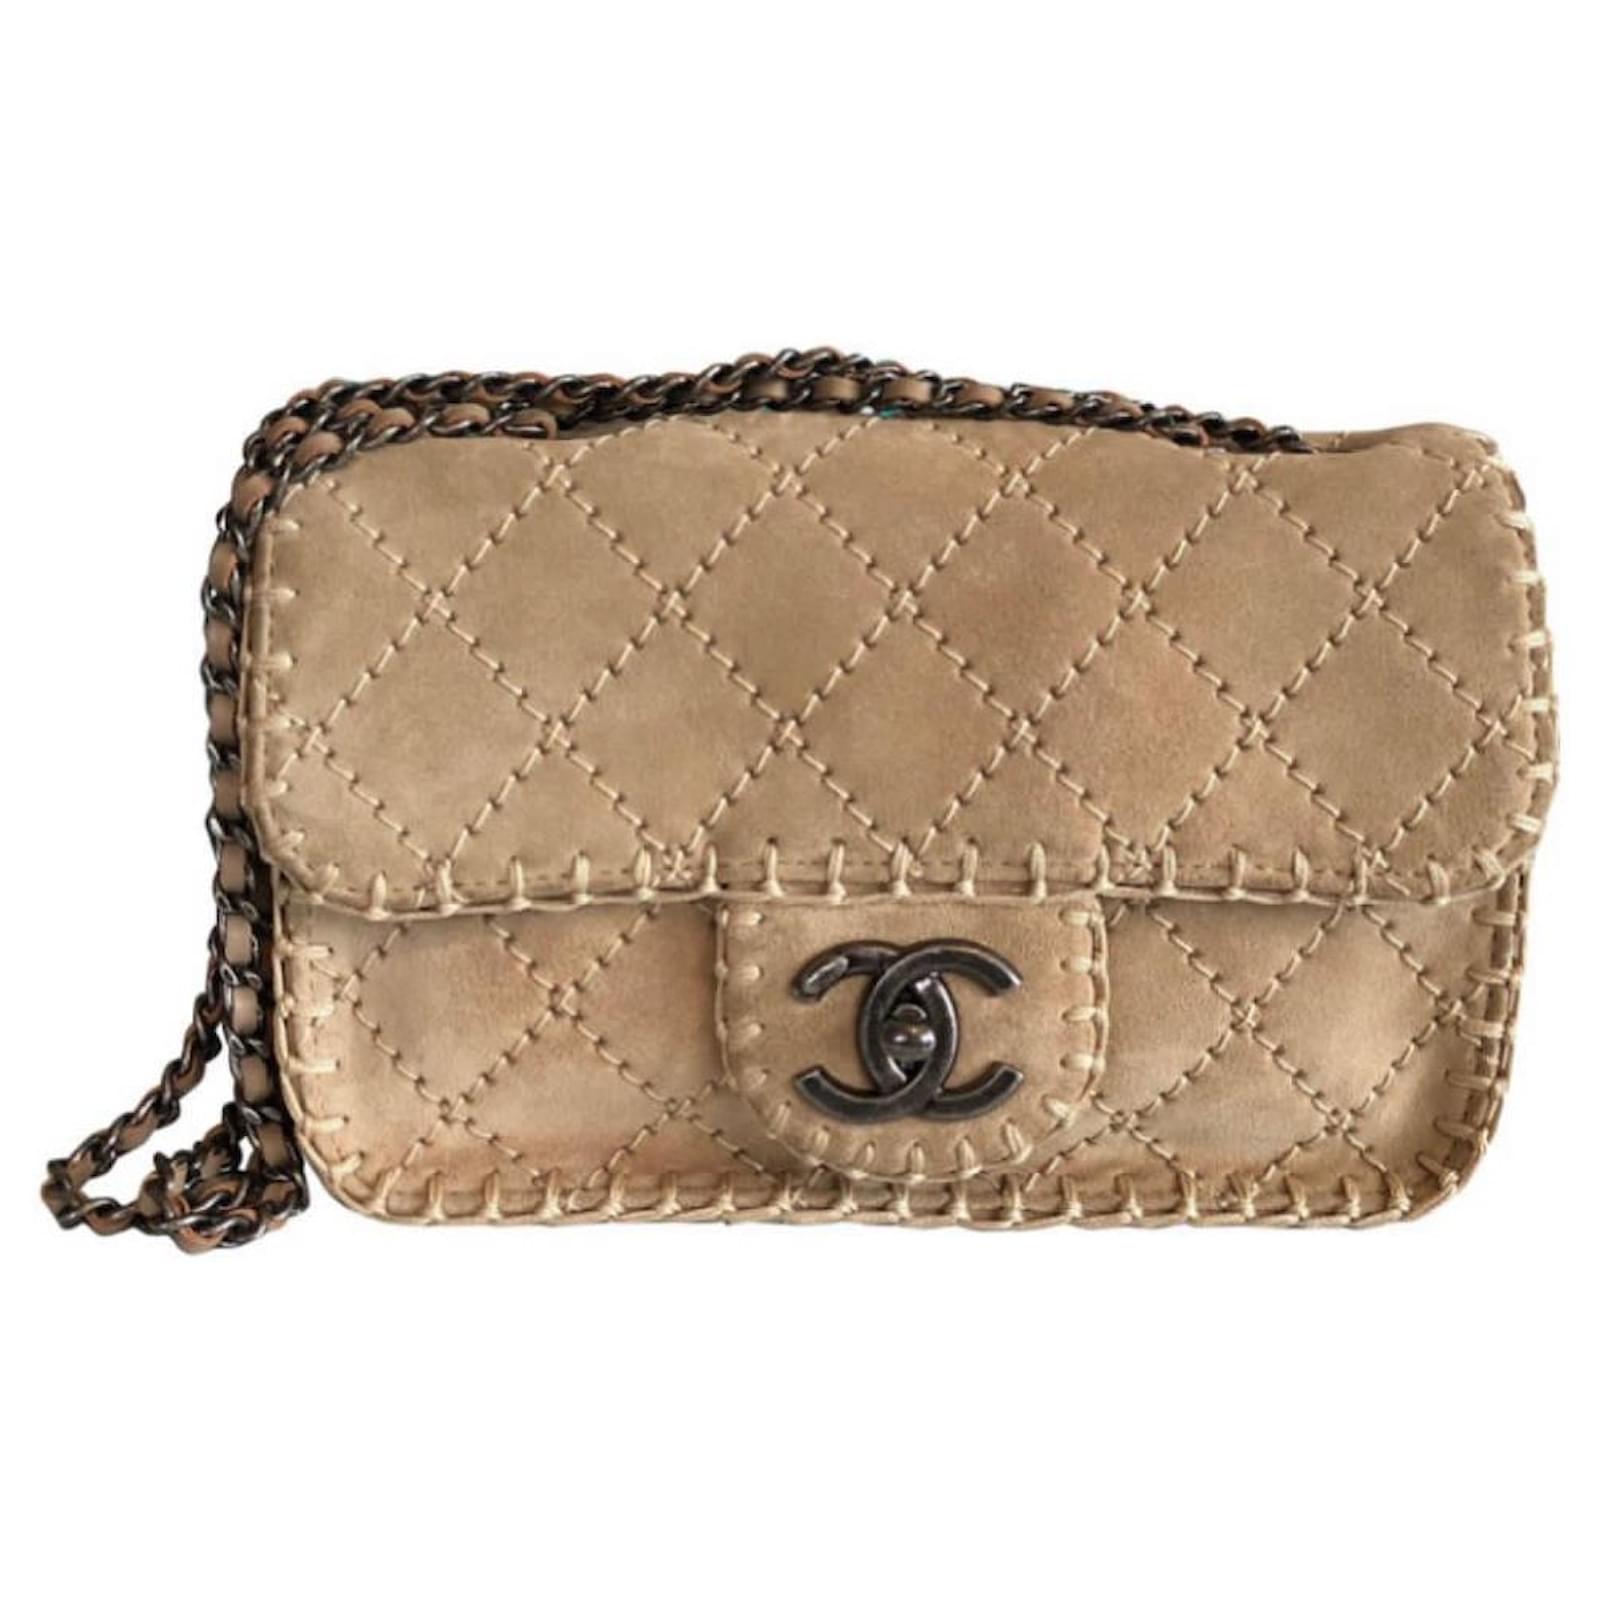 Chanel Suede Flap Bag